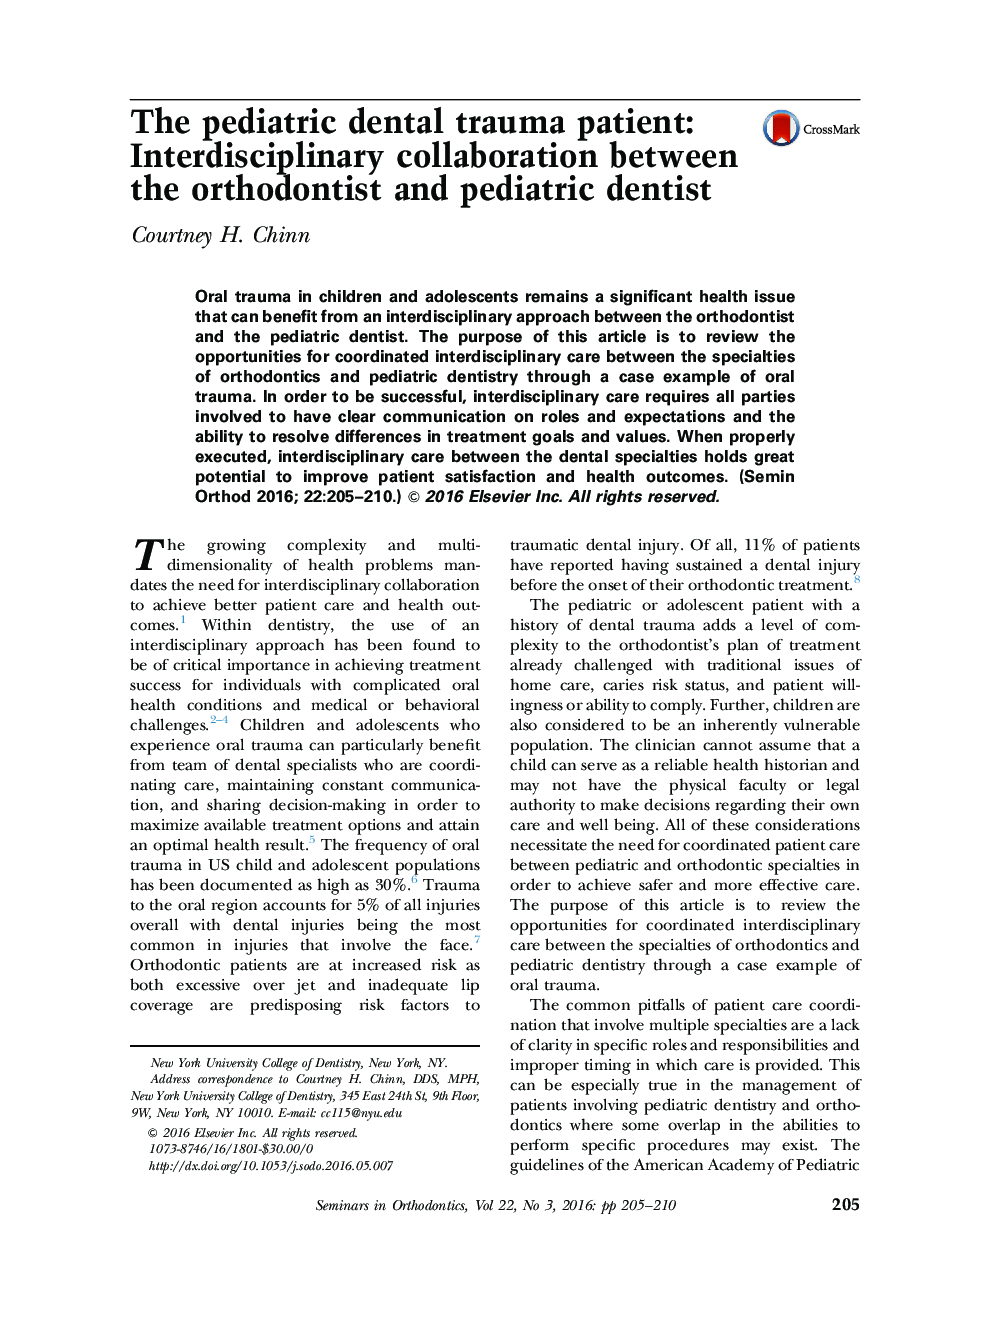 The pediatric dental trauma patient: Interdisciplinary collaboration between the orthodontist and pediatric dentist